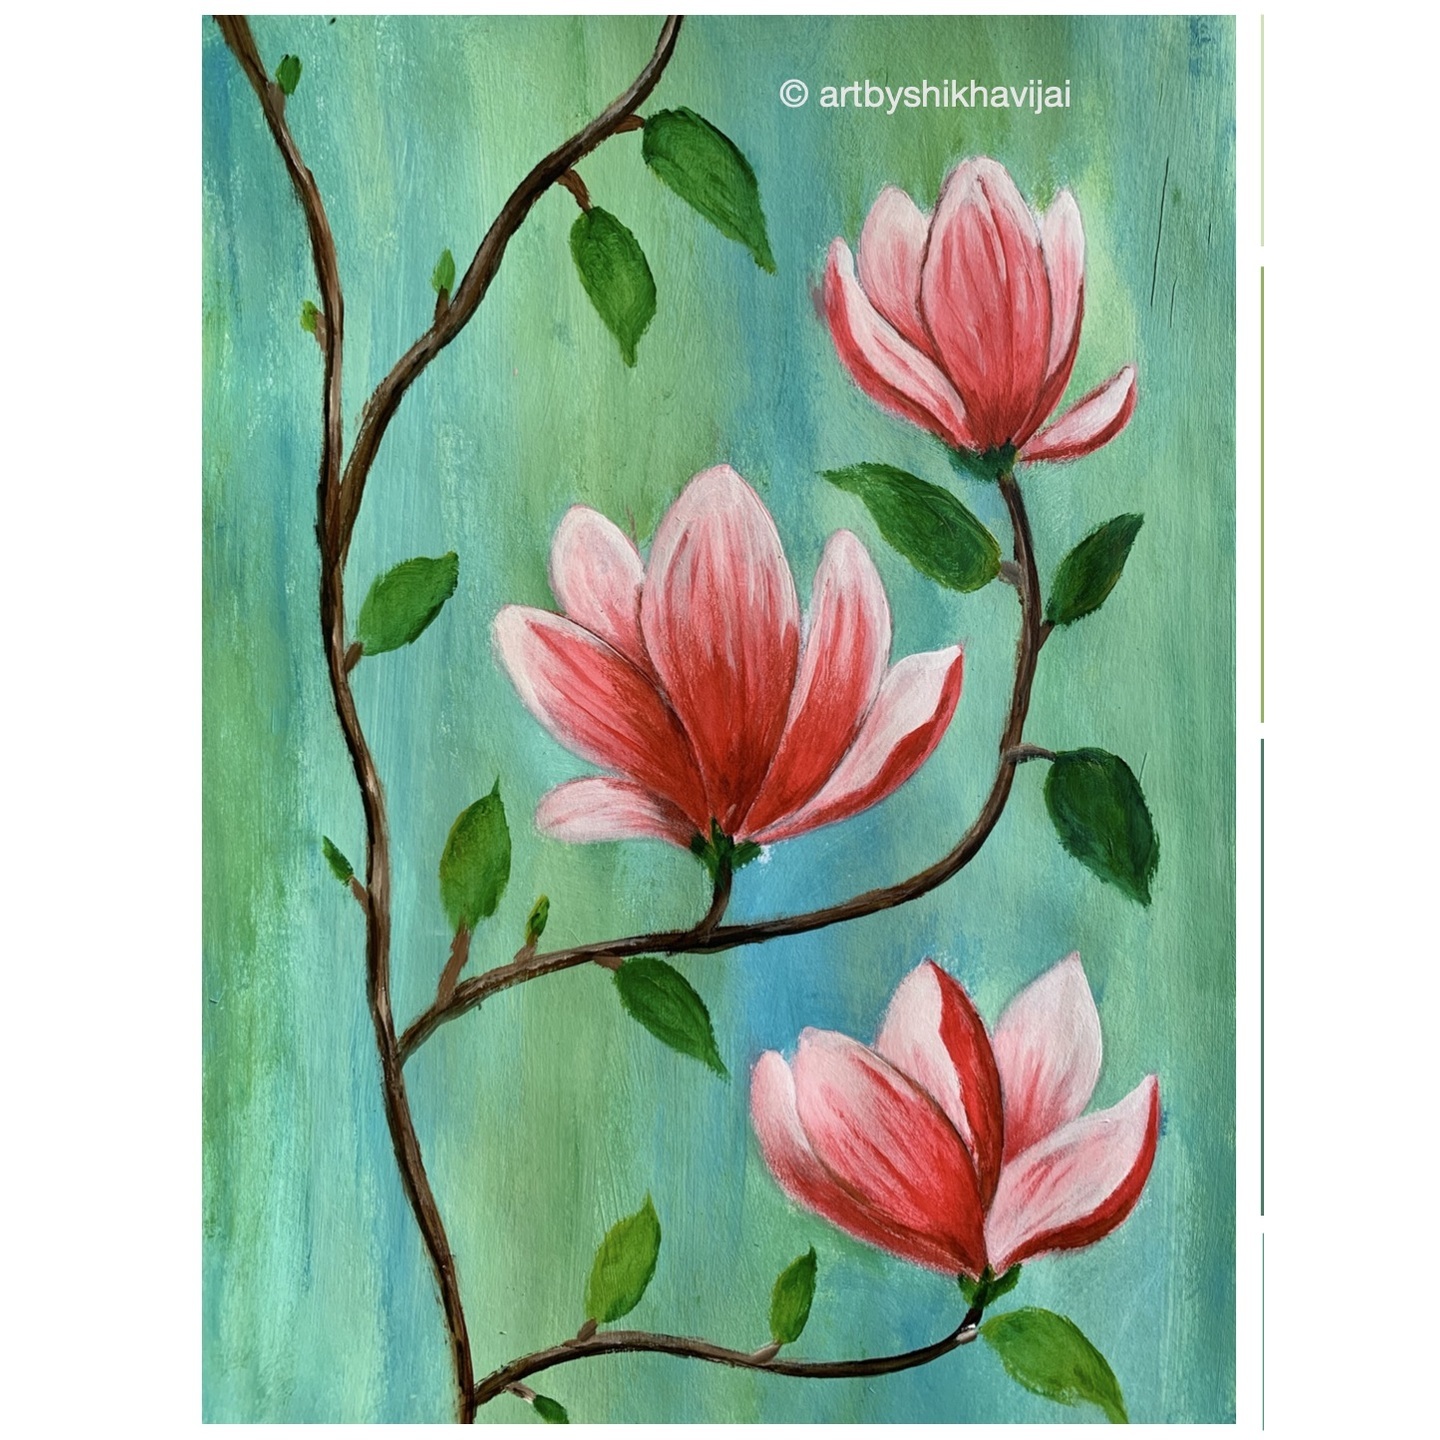 Magnolias in Bloom